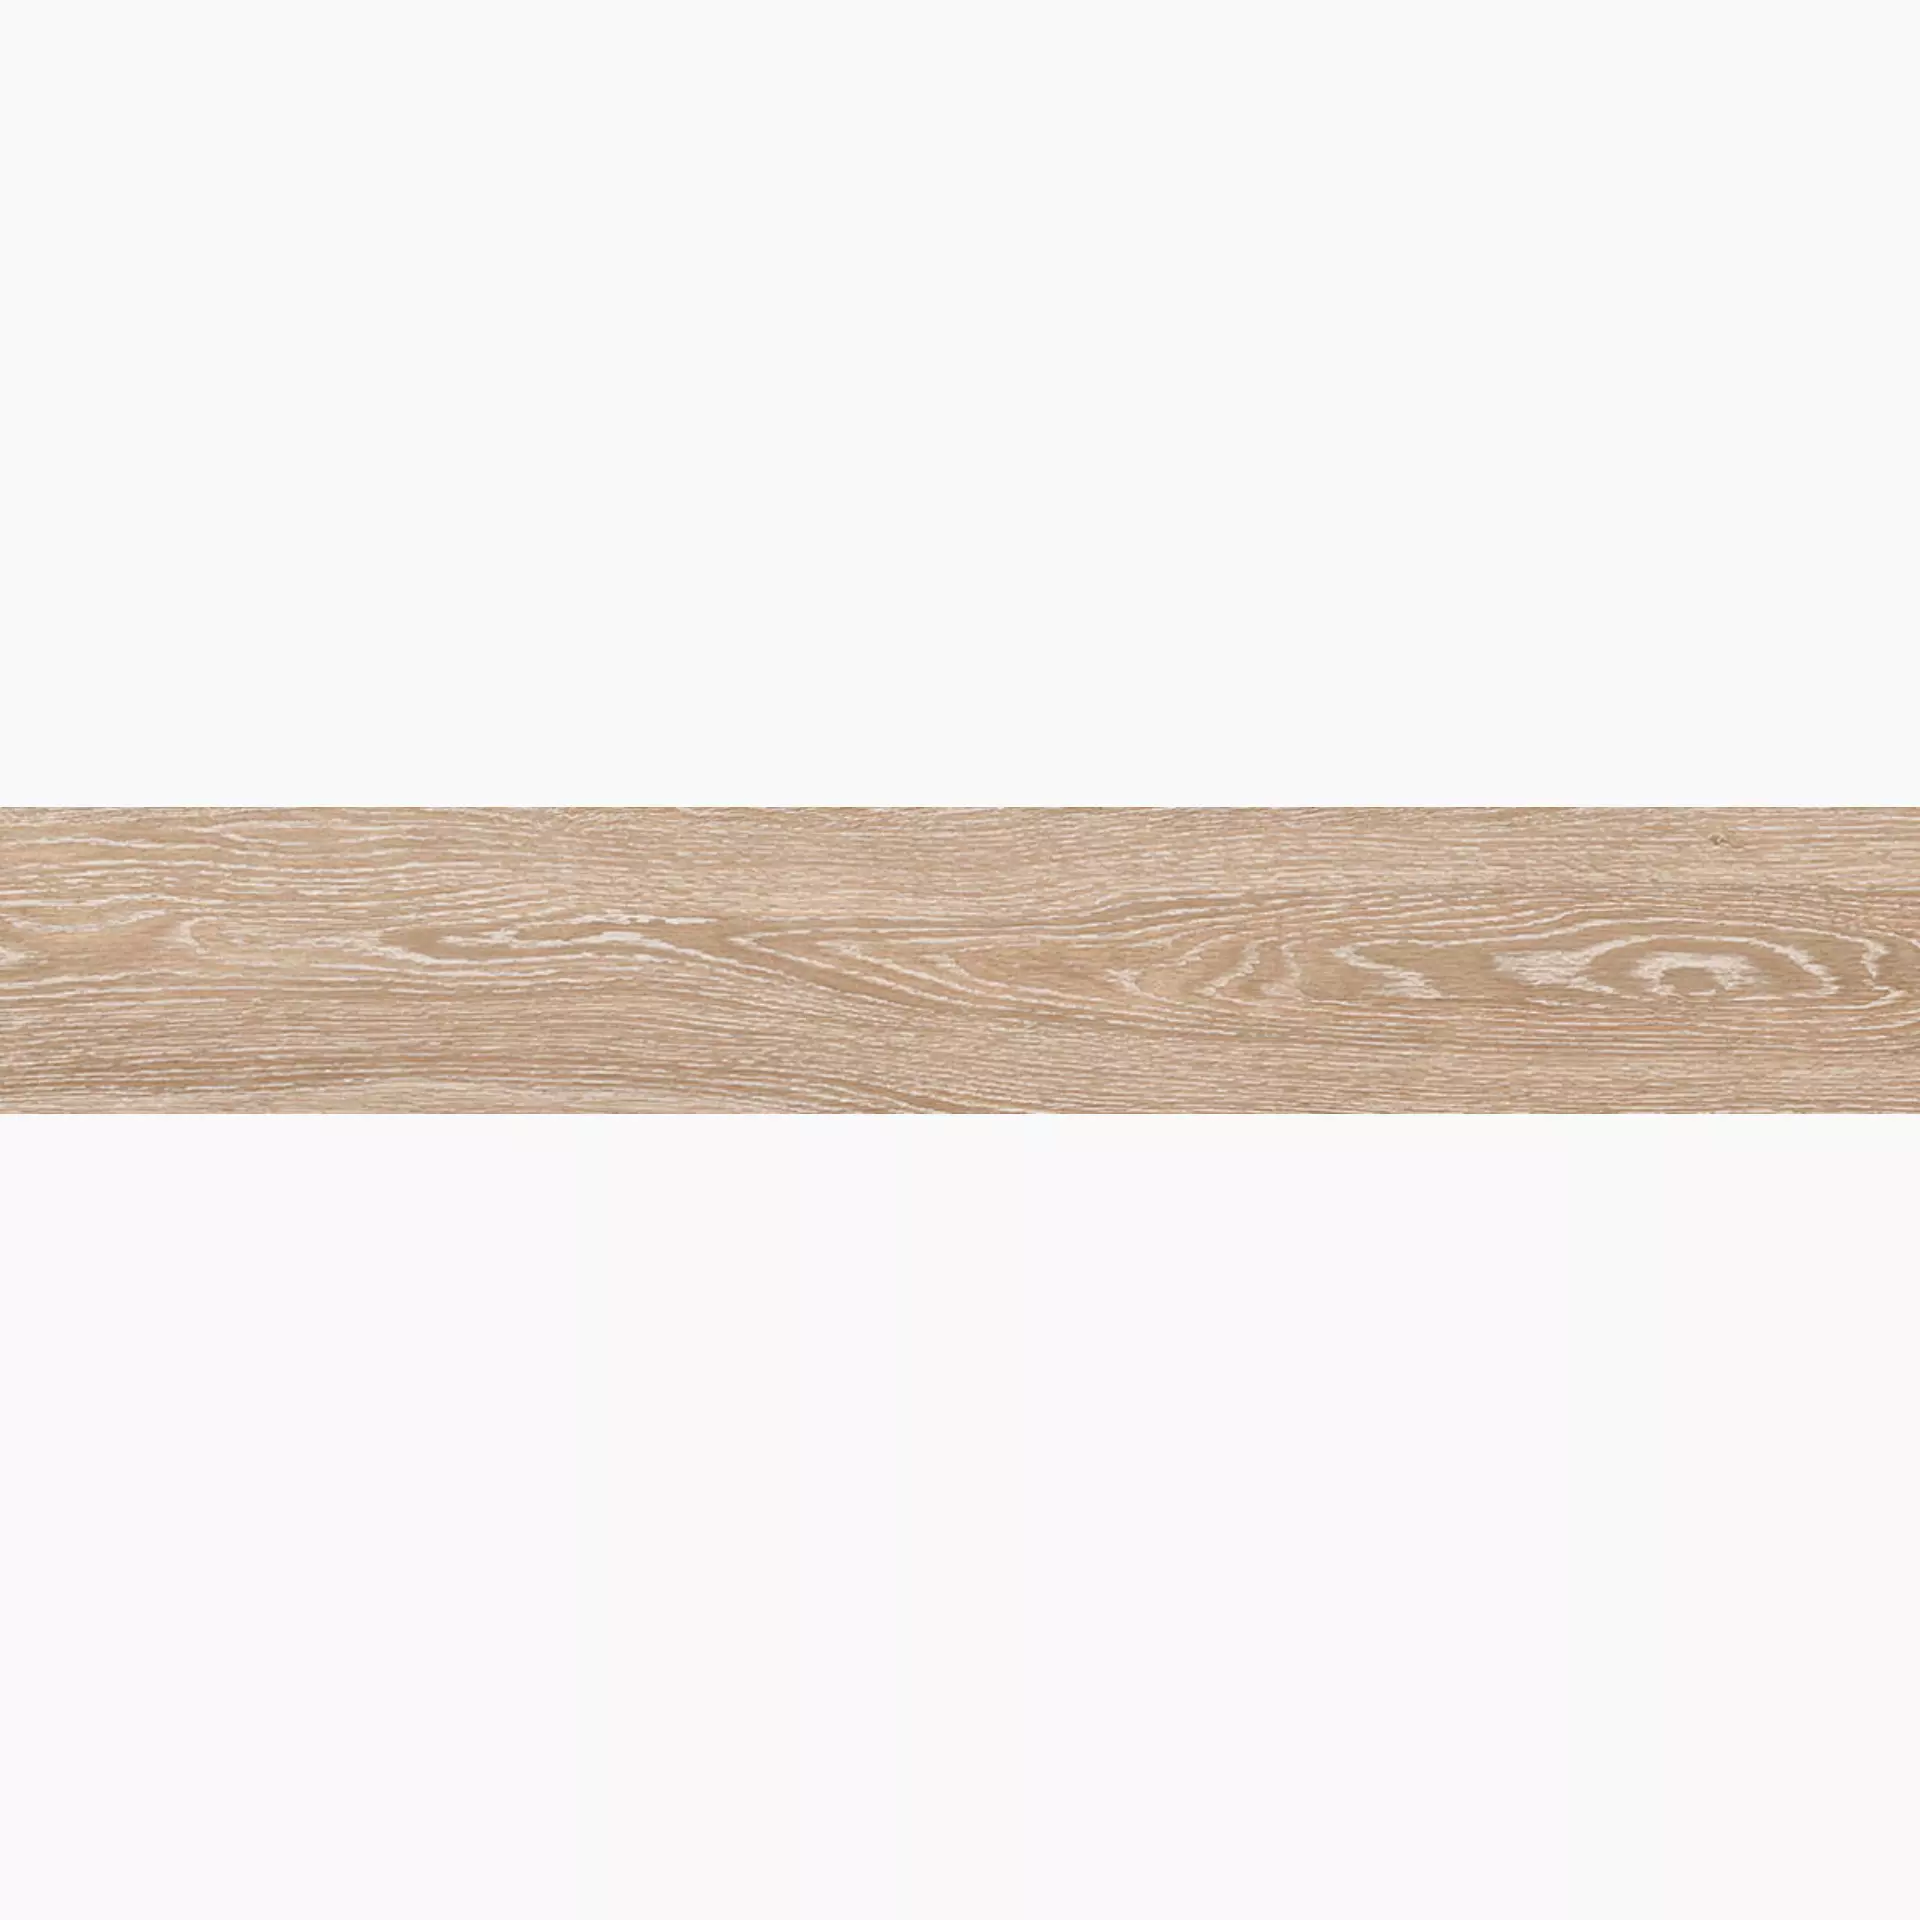 La Faenza Legno Dark Beige Natural Slate Cut Matt 168055 20x120cm rectified 10mm - LEGNO 2012BS RM